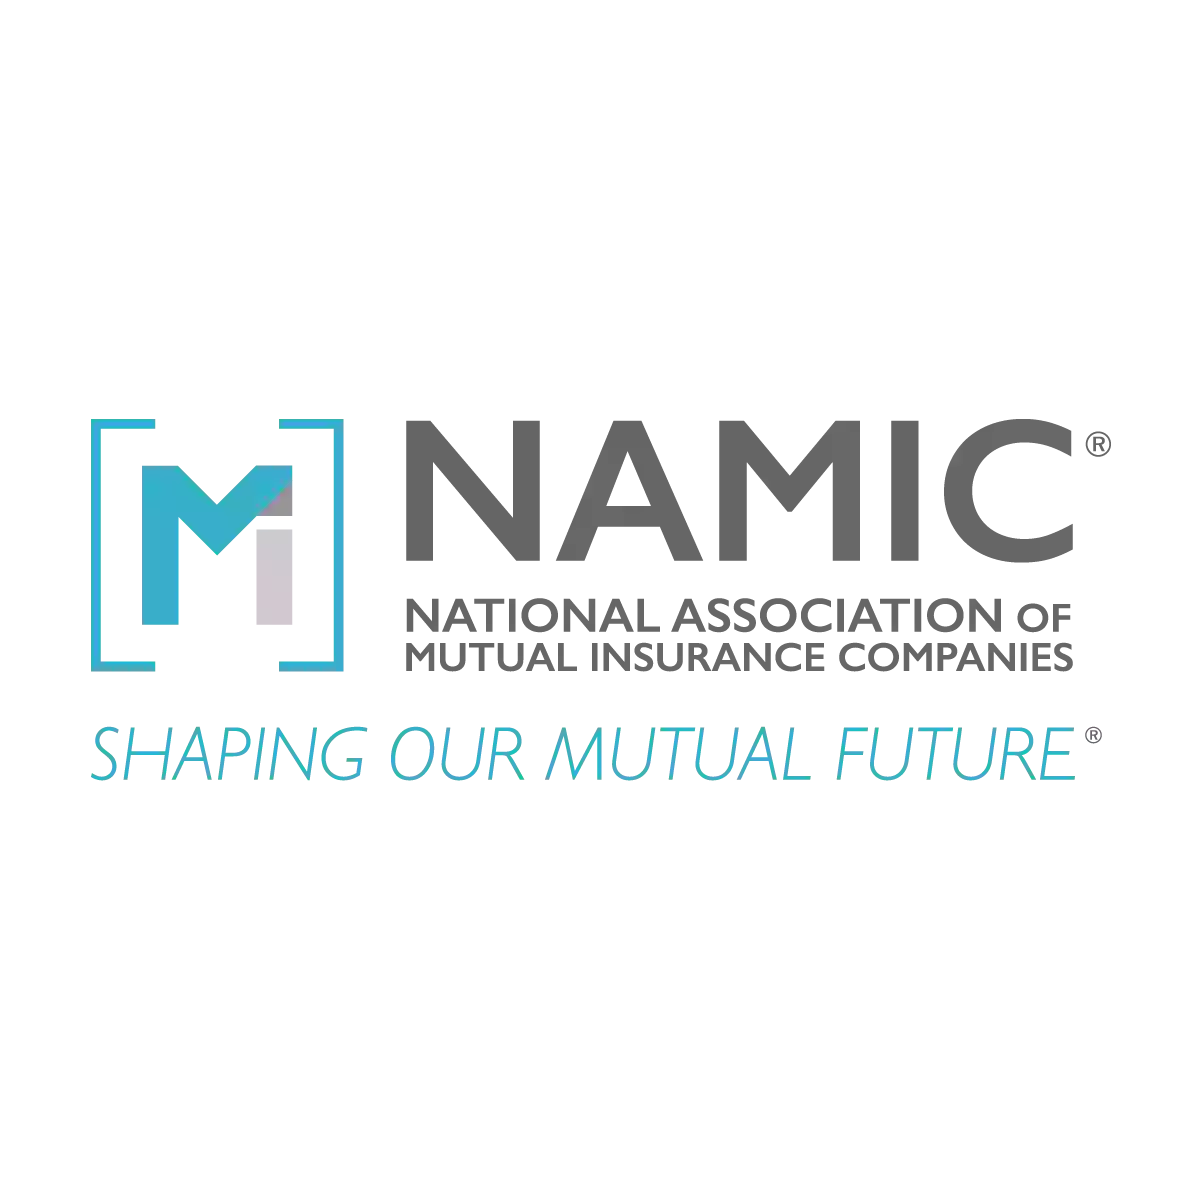 National Association of Mutual Insurance Companies